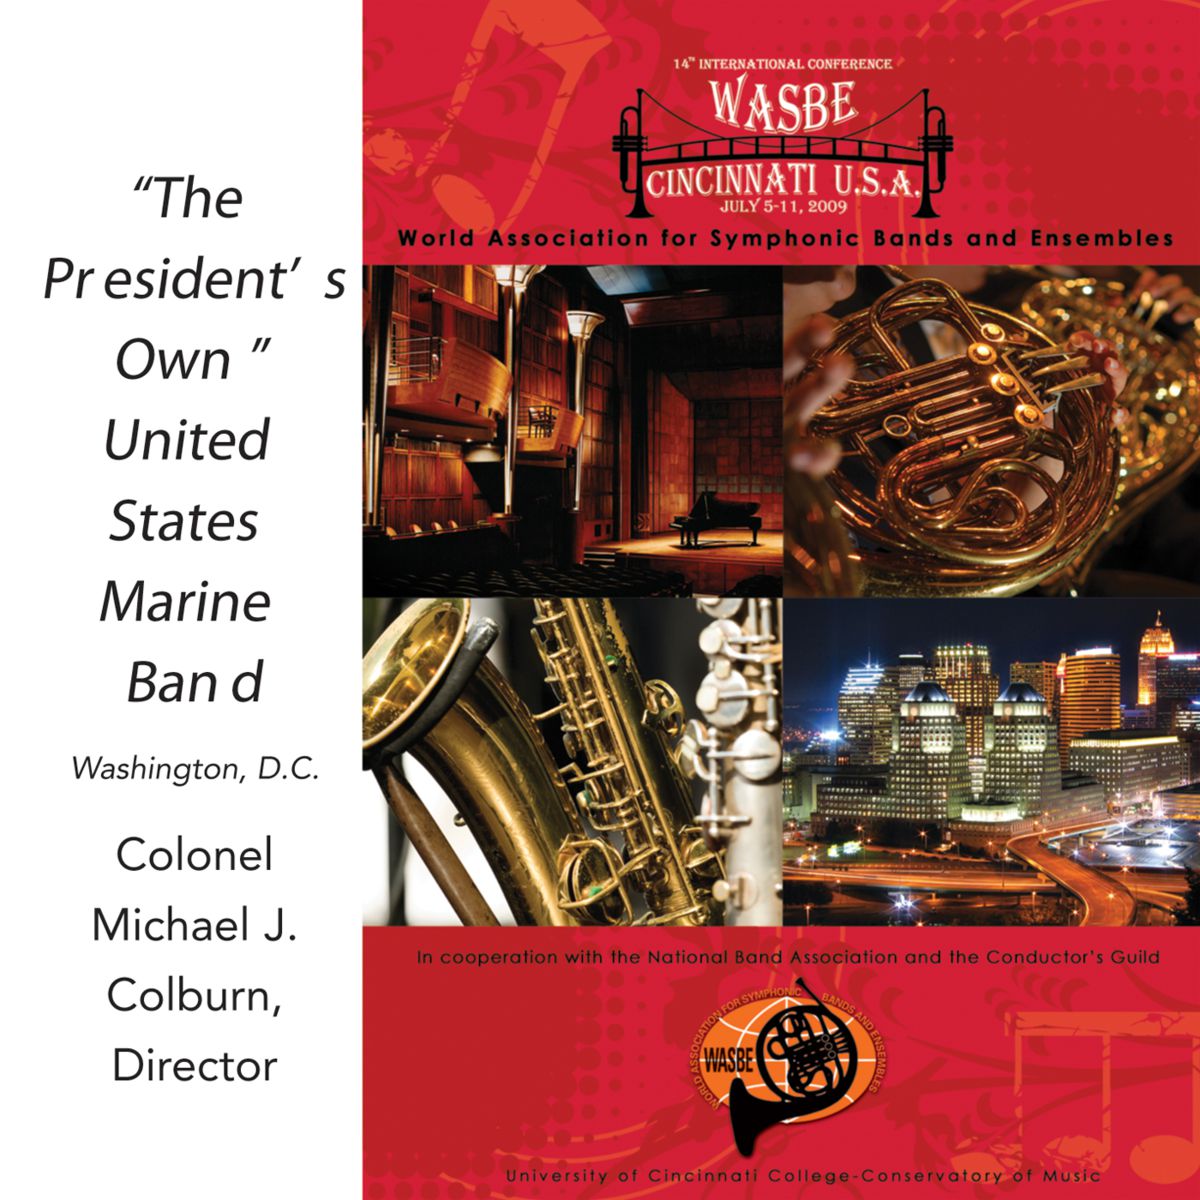 2009 WASBE Cincinnati, USA: "The Presidents Own" United States Marine Band - hacer clic aqu